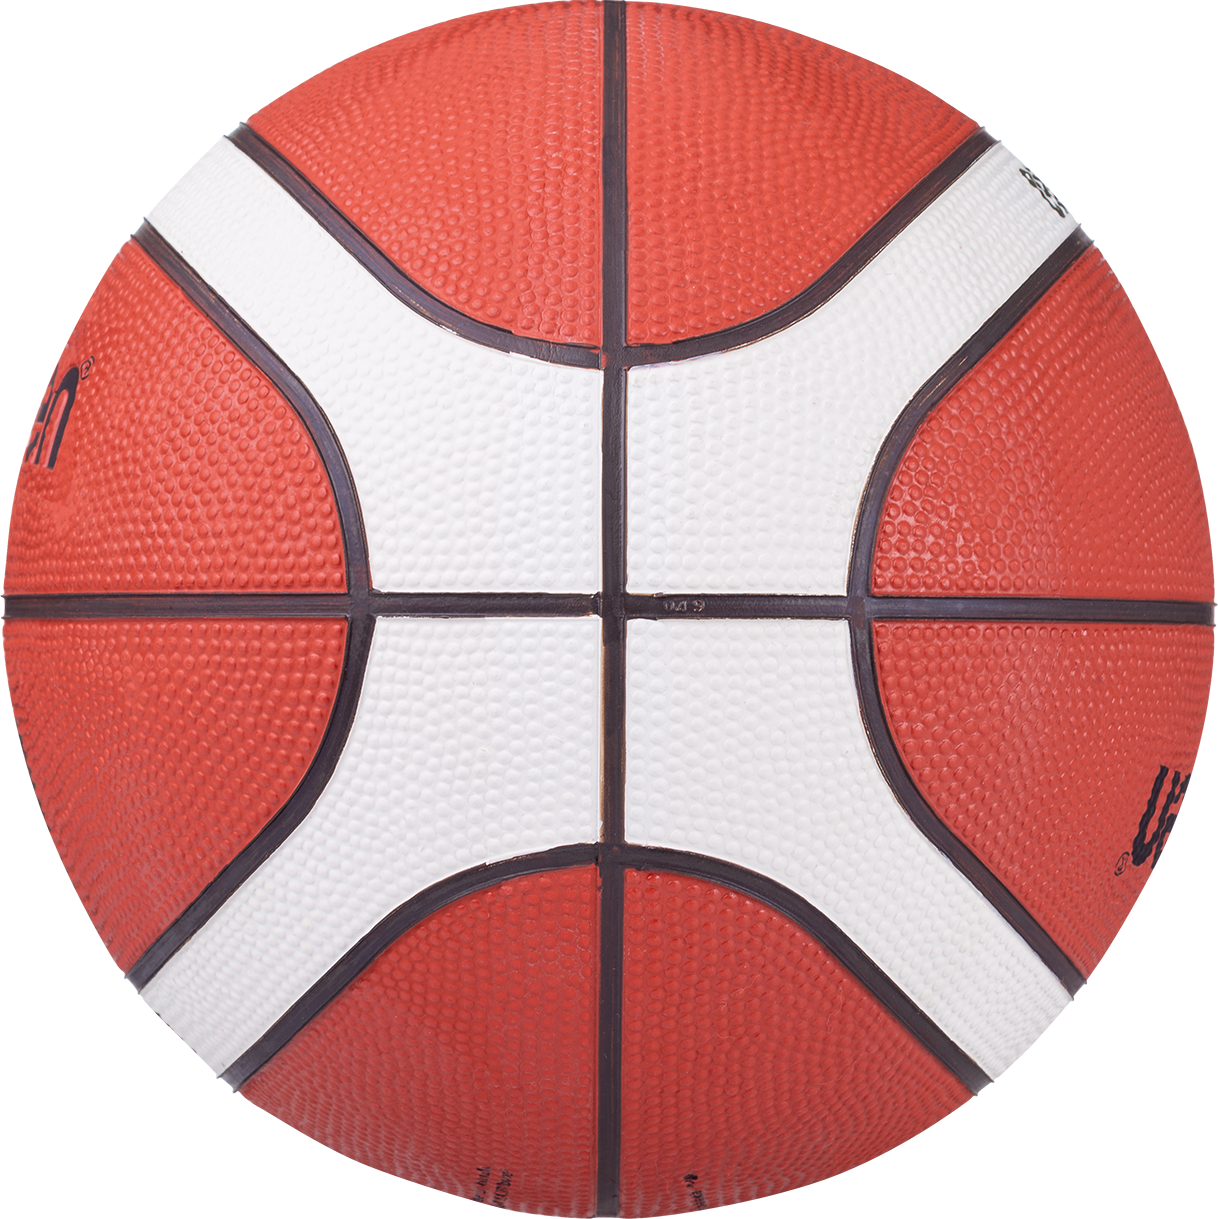 Мяч баск. "MOLTEN B7G2000" р.7, FIBA Appr Level III, 12 пан, резина, бут. кам, нейл. корд, ор-беж-чер